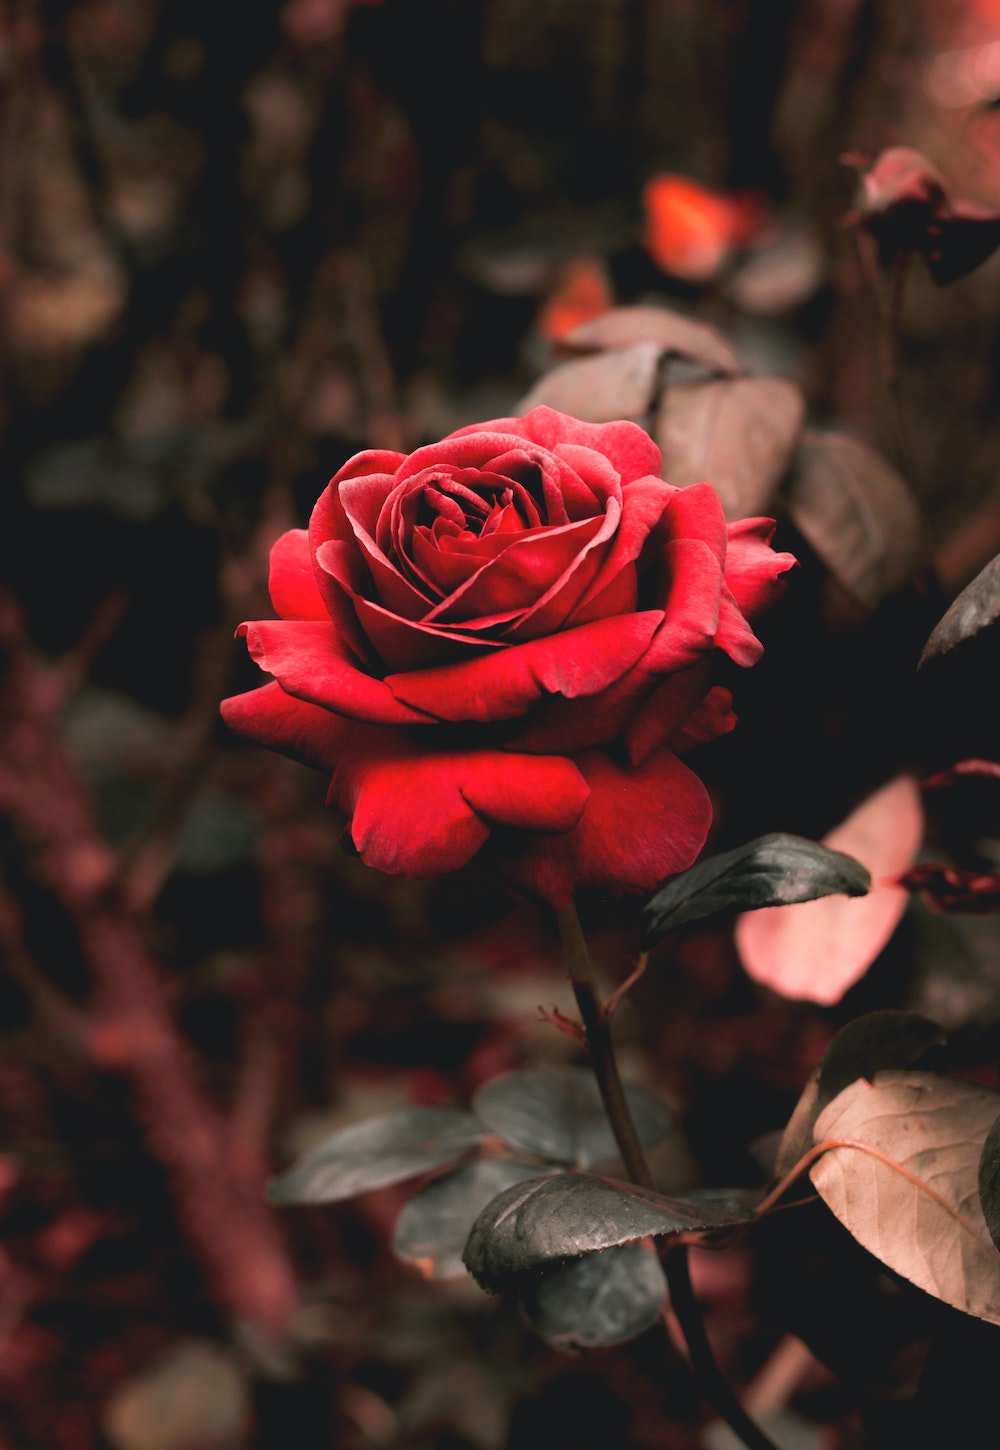 The meaning of roses in Greek mythology - on Thursd